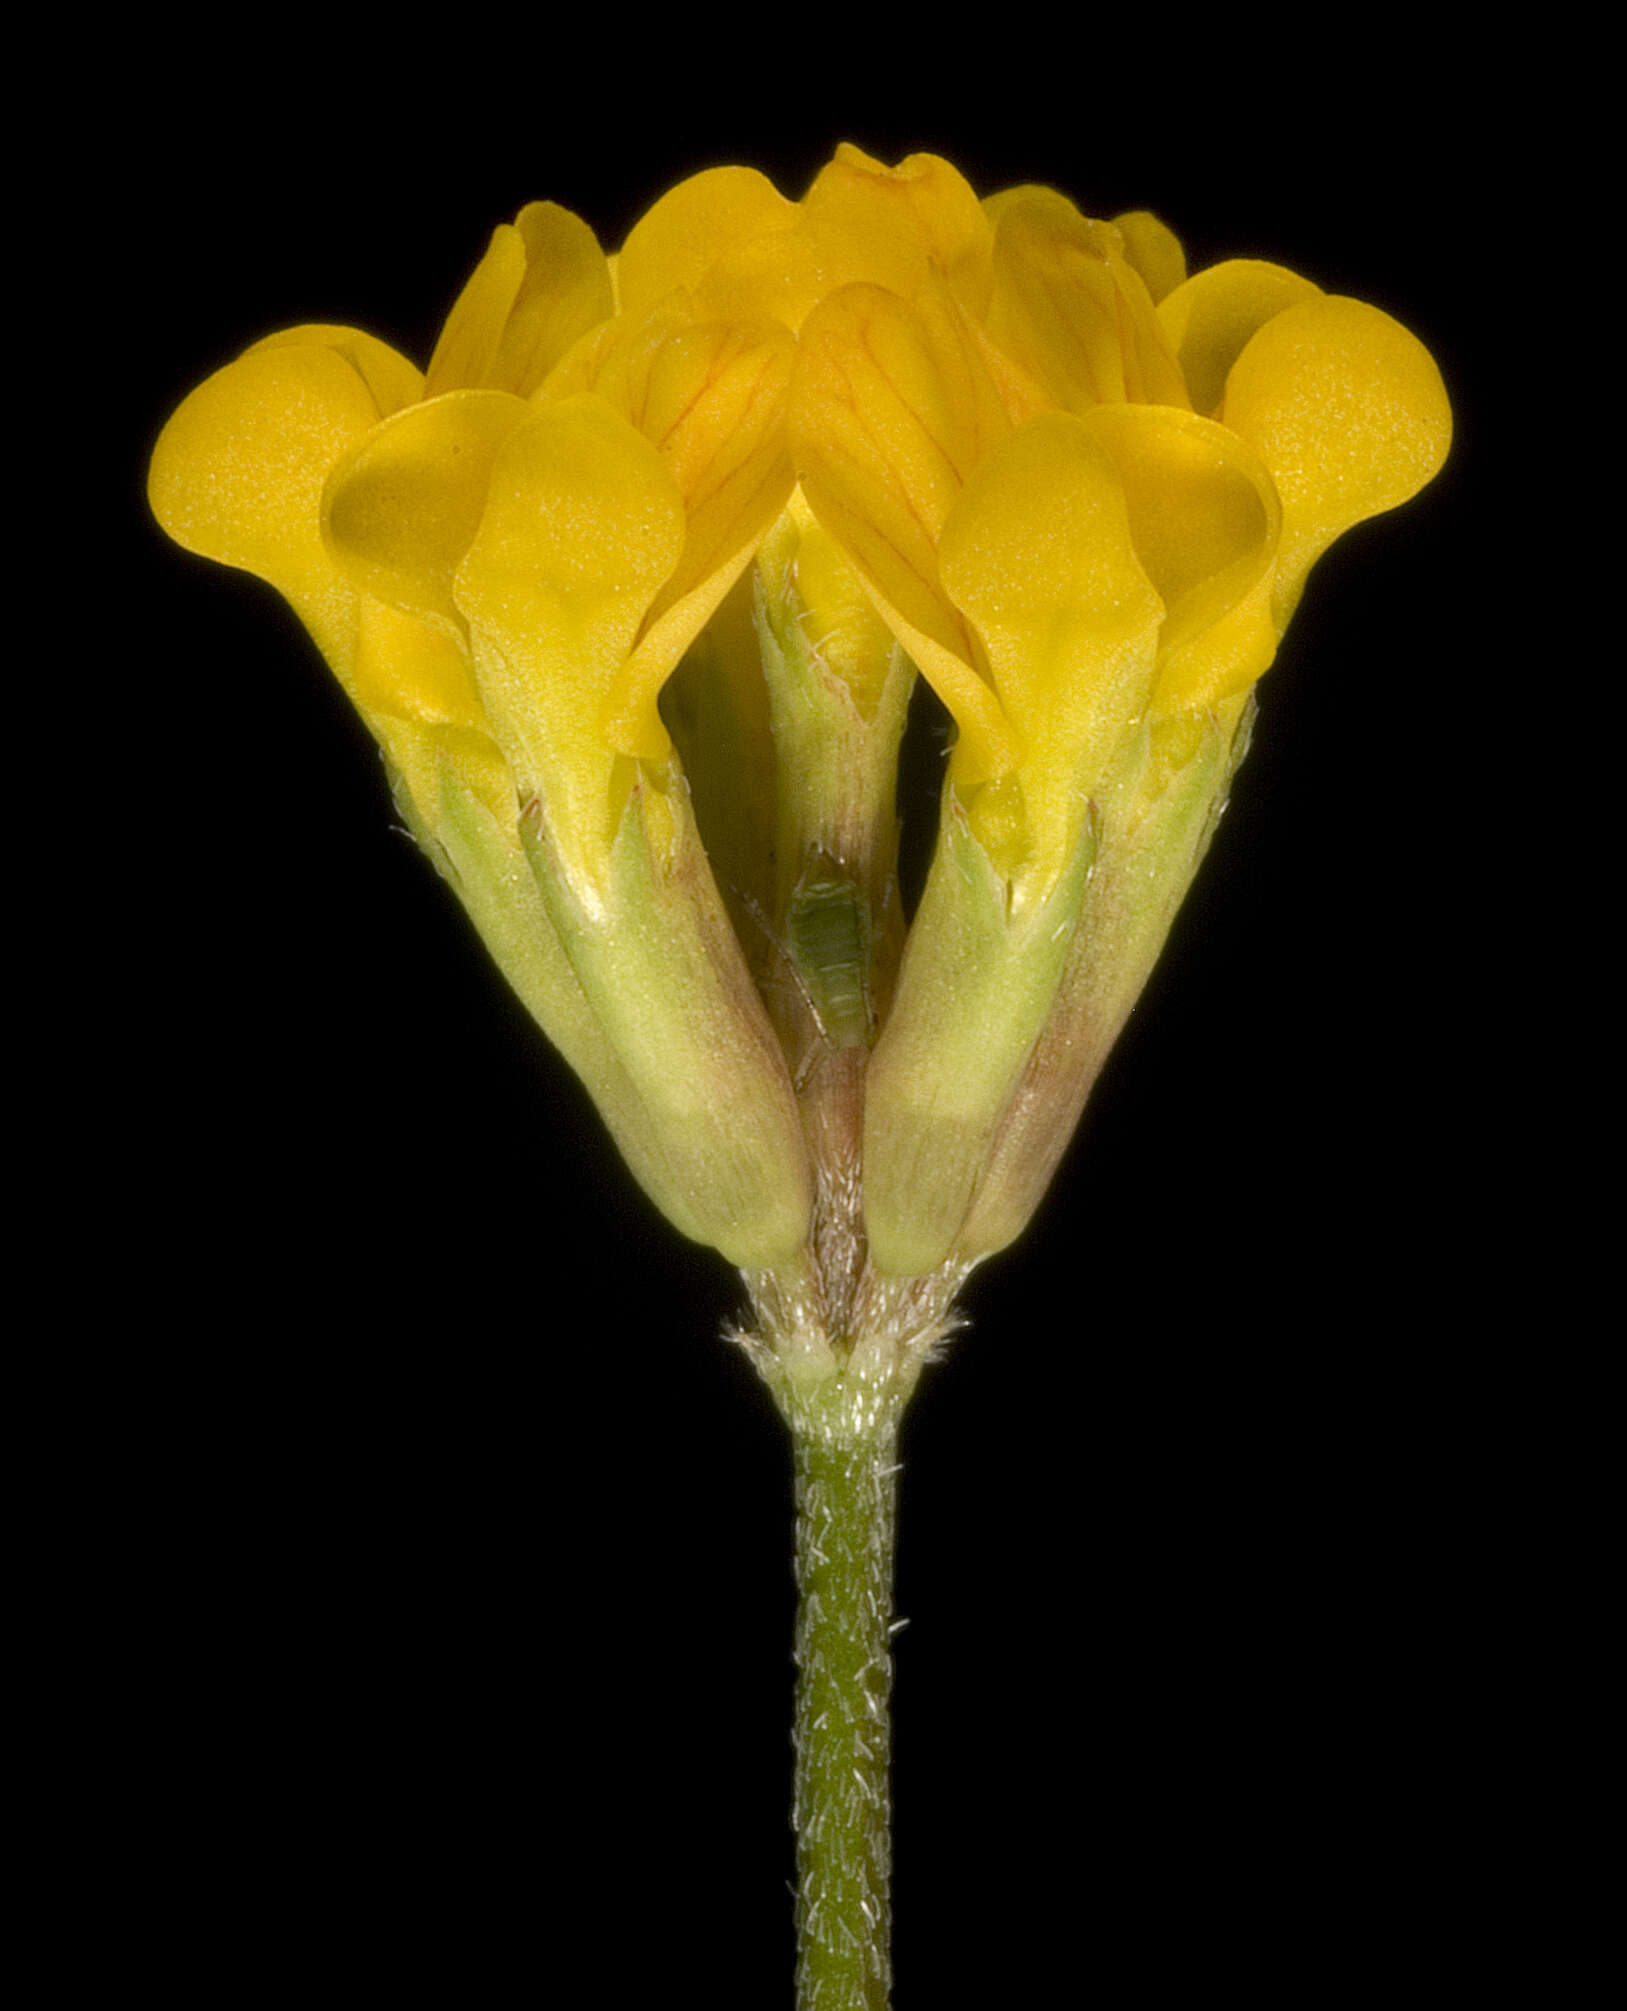 Image of yellow bird's-foot